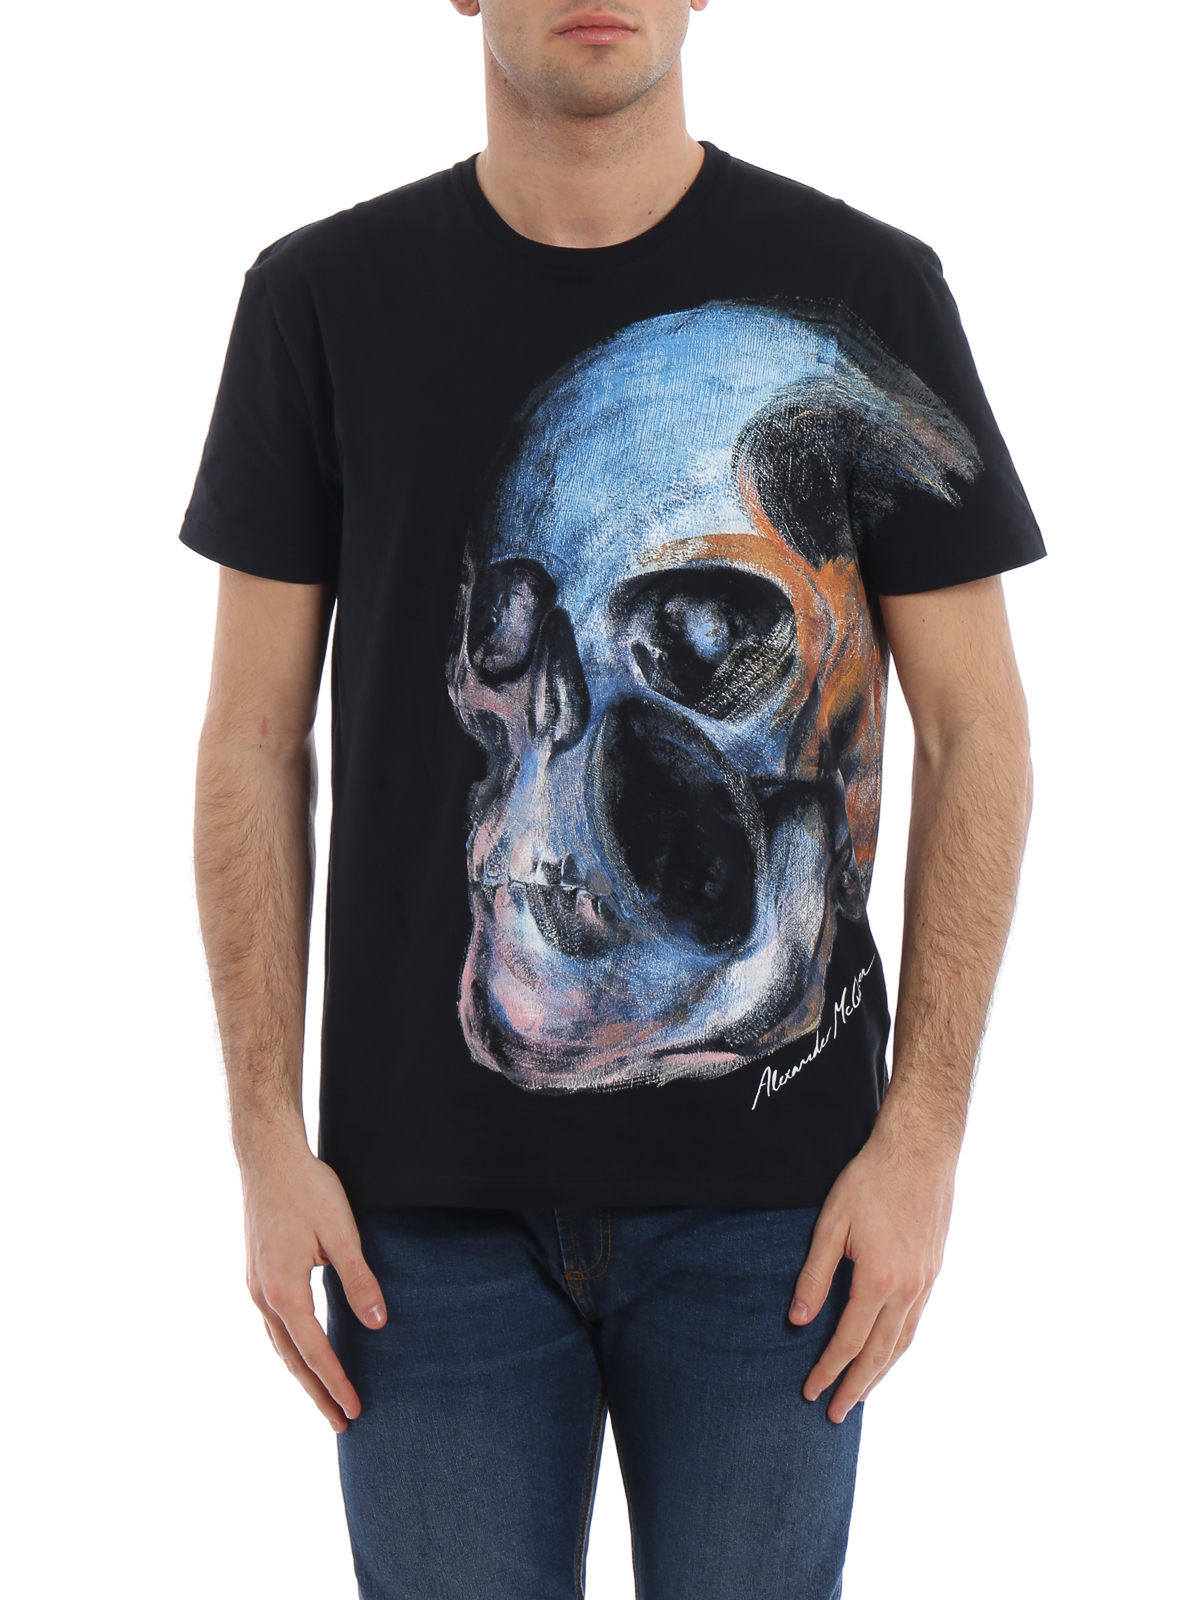 T-shirts Alexander - Painting effect Skull print black T-shirt - 550475QMZ610901